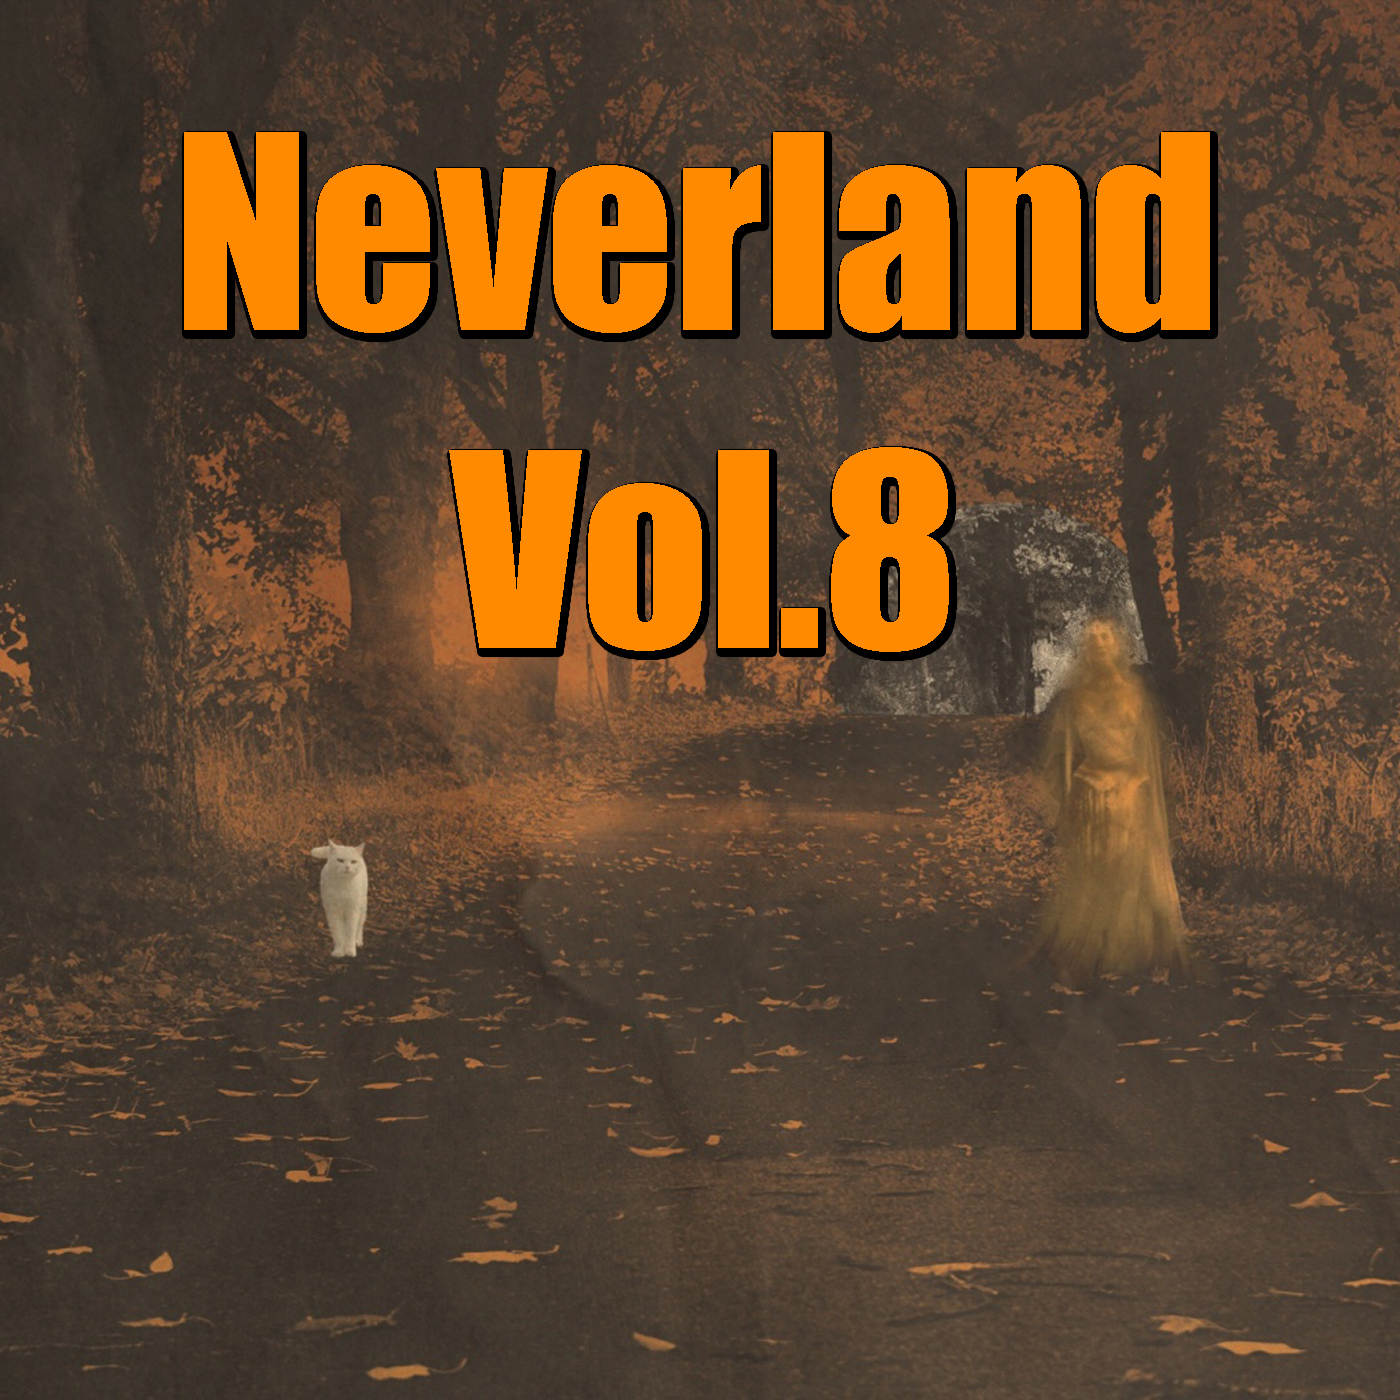 Neverland, Vol. 8